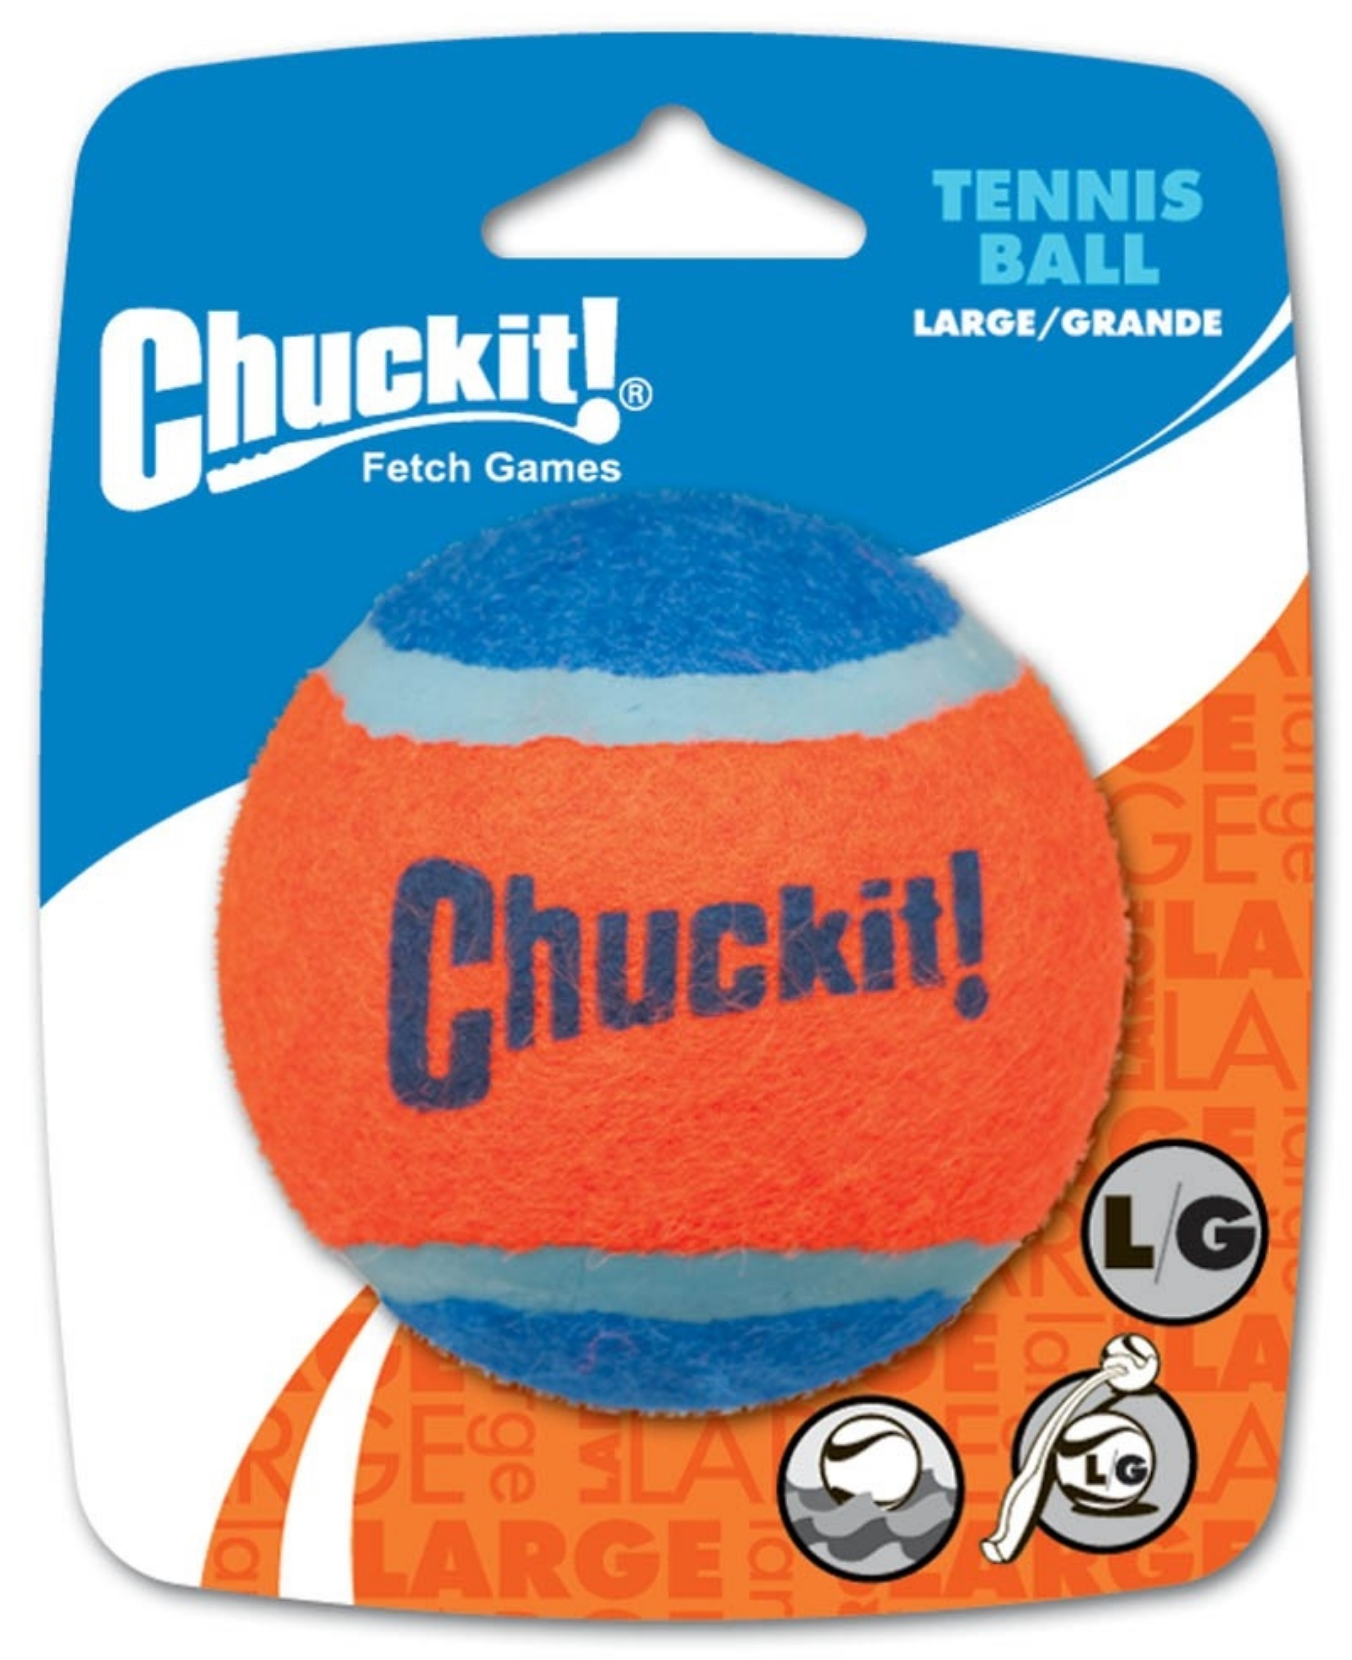 large tennis ball dog toy